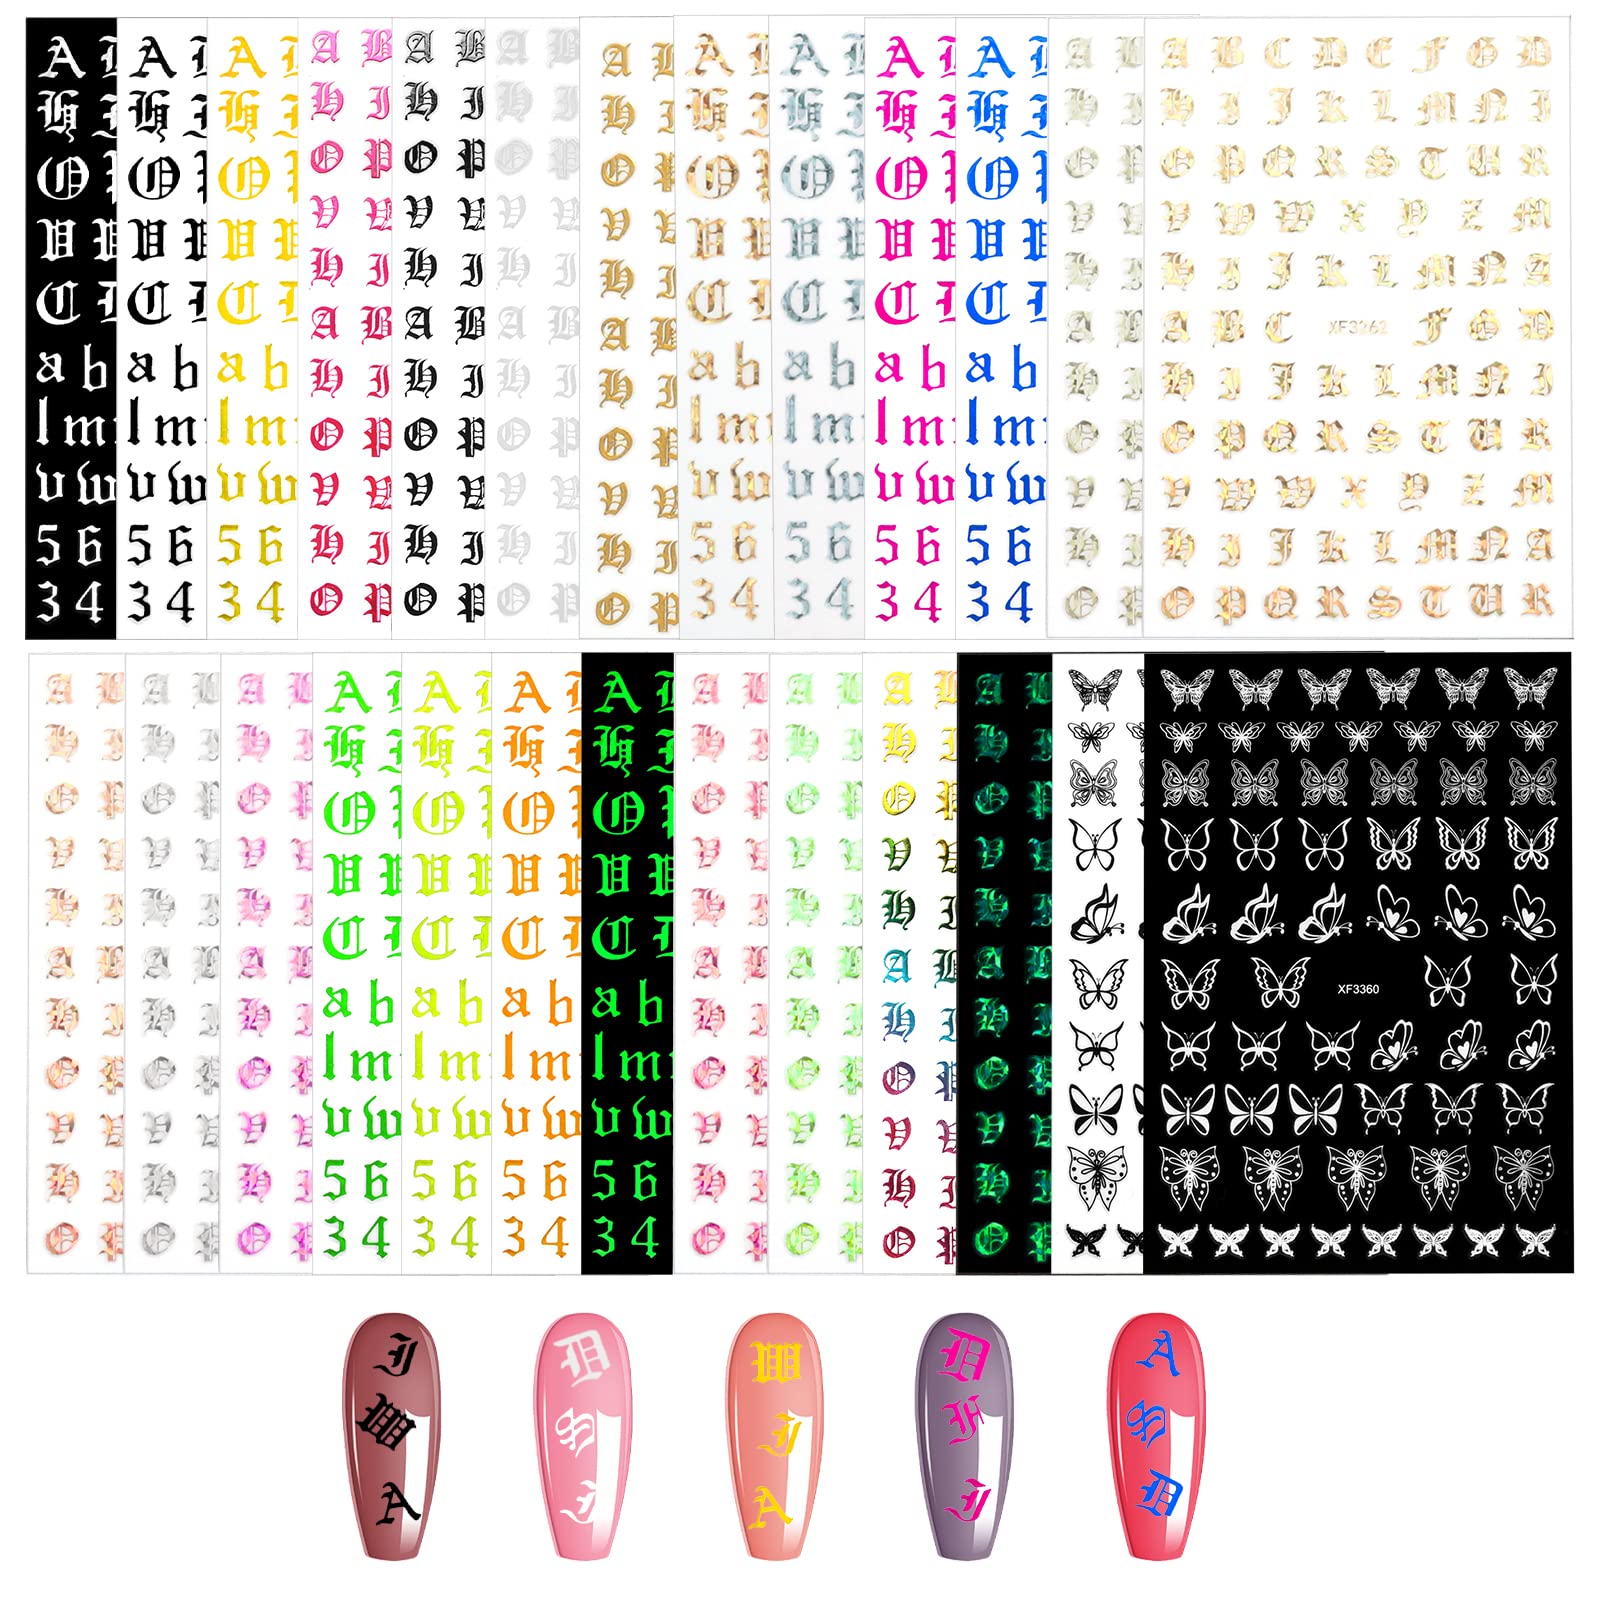 Alphabet Stickers - 24 Sheets